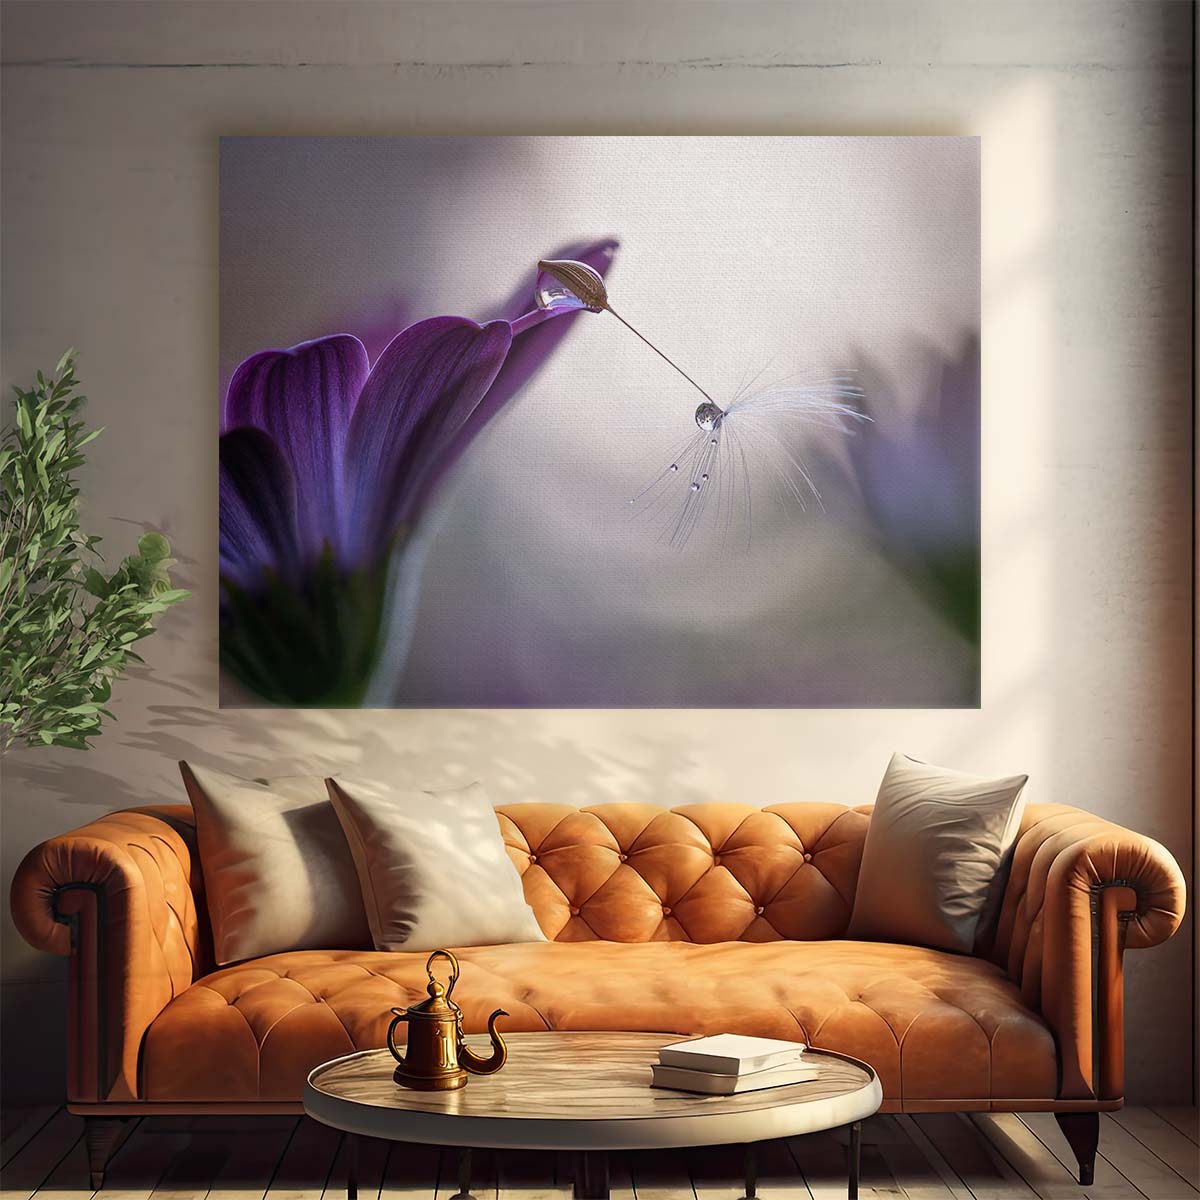 Delicate Purple Dandelion Dewdrops Macro Wall Art by Luxuriance Designs. Made in USA.